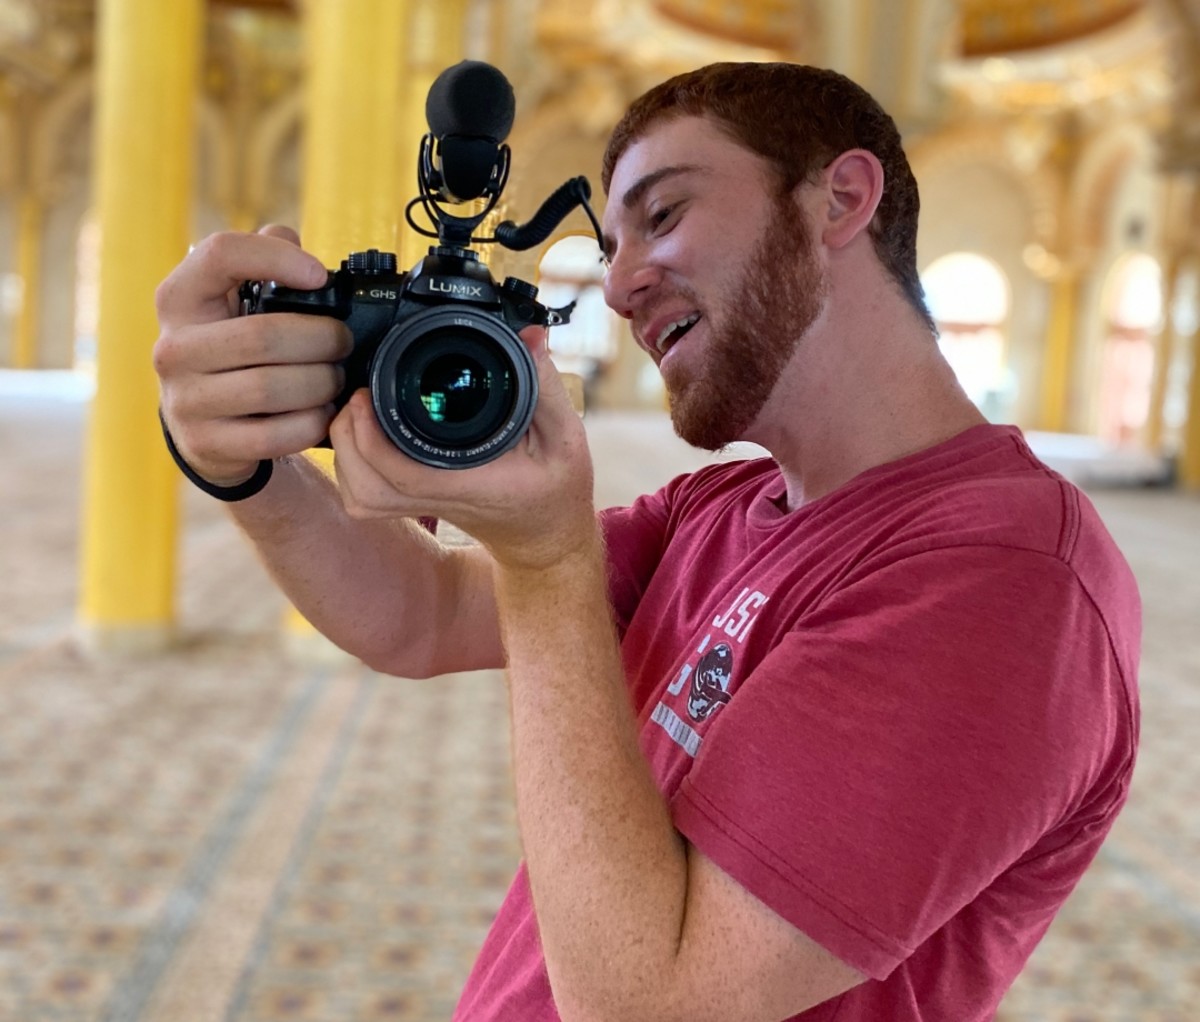 Drew Binsky in a red shirt holding a camera